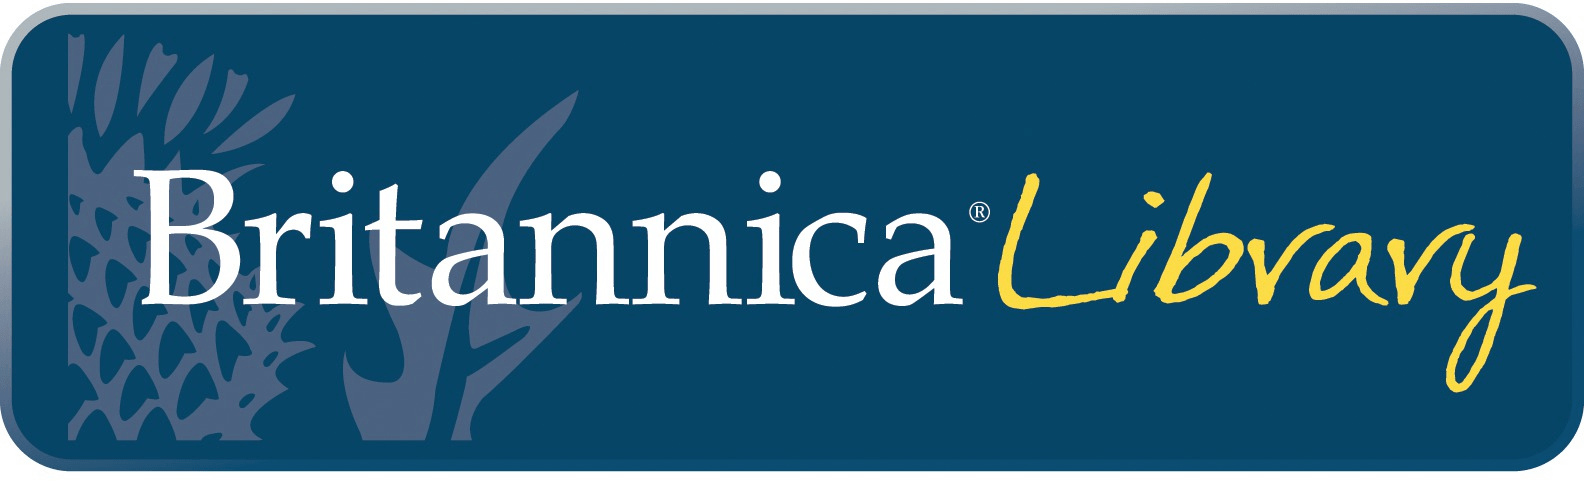 Britannica Logo - Digital Reference